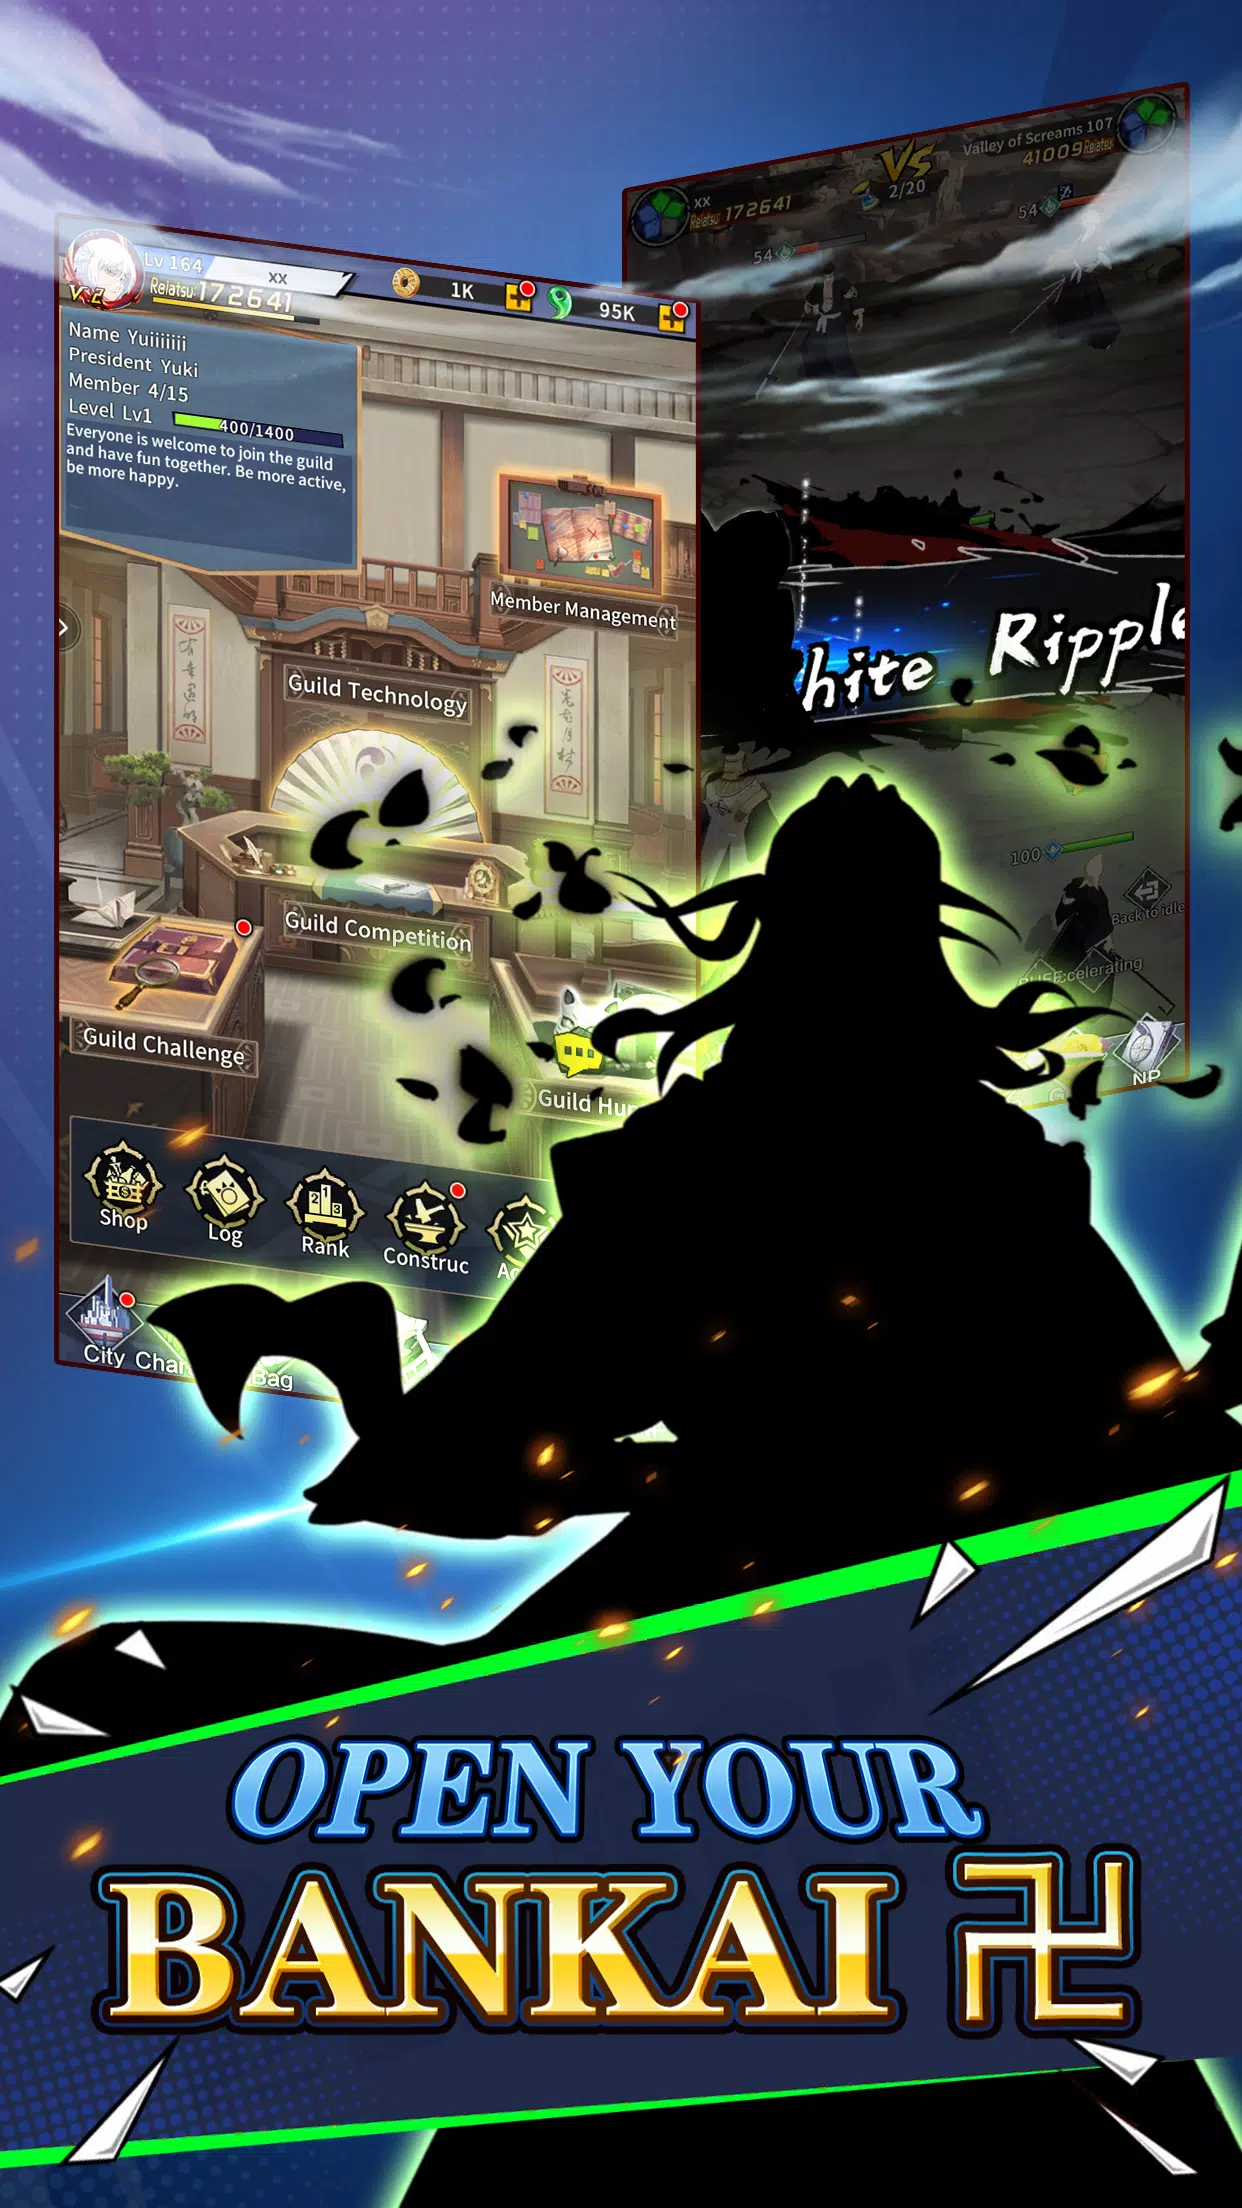 Reaper Soul Revival Codes – Get Your Freebies! – Gamezebo